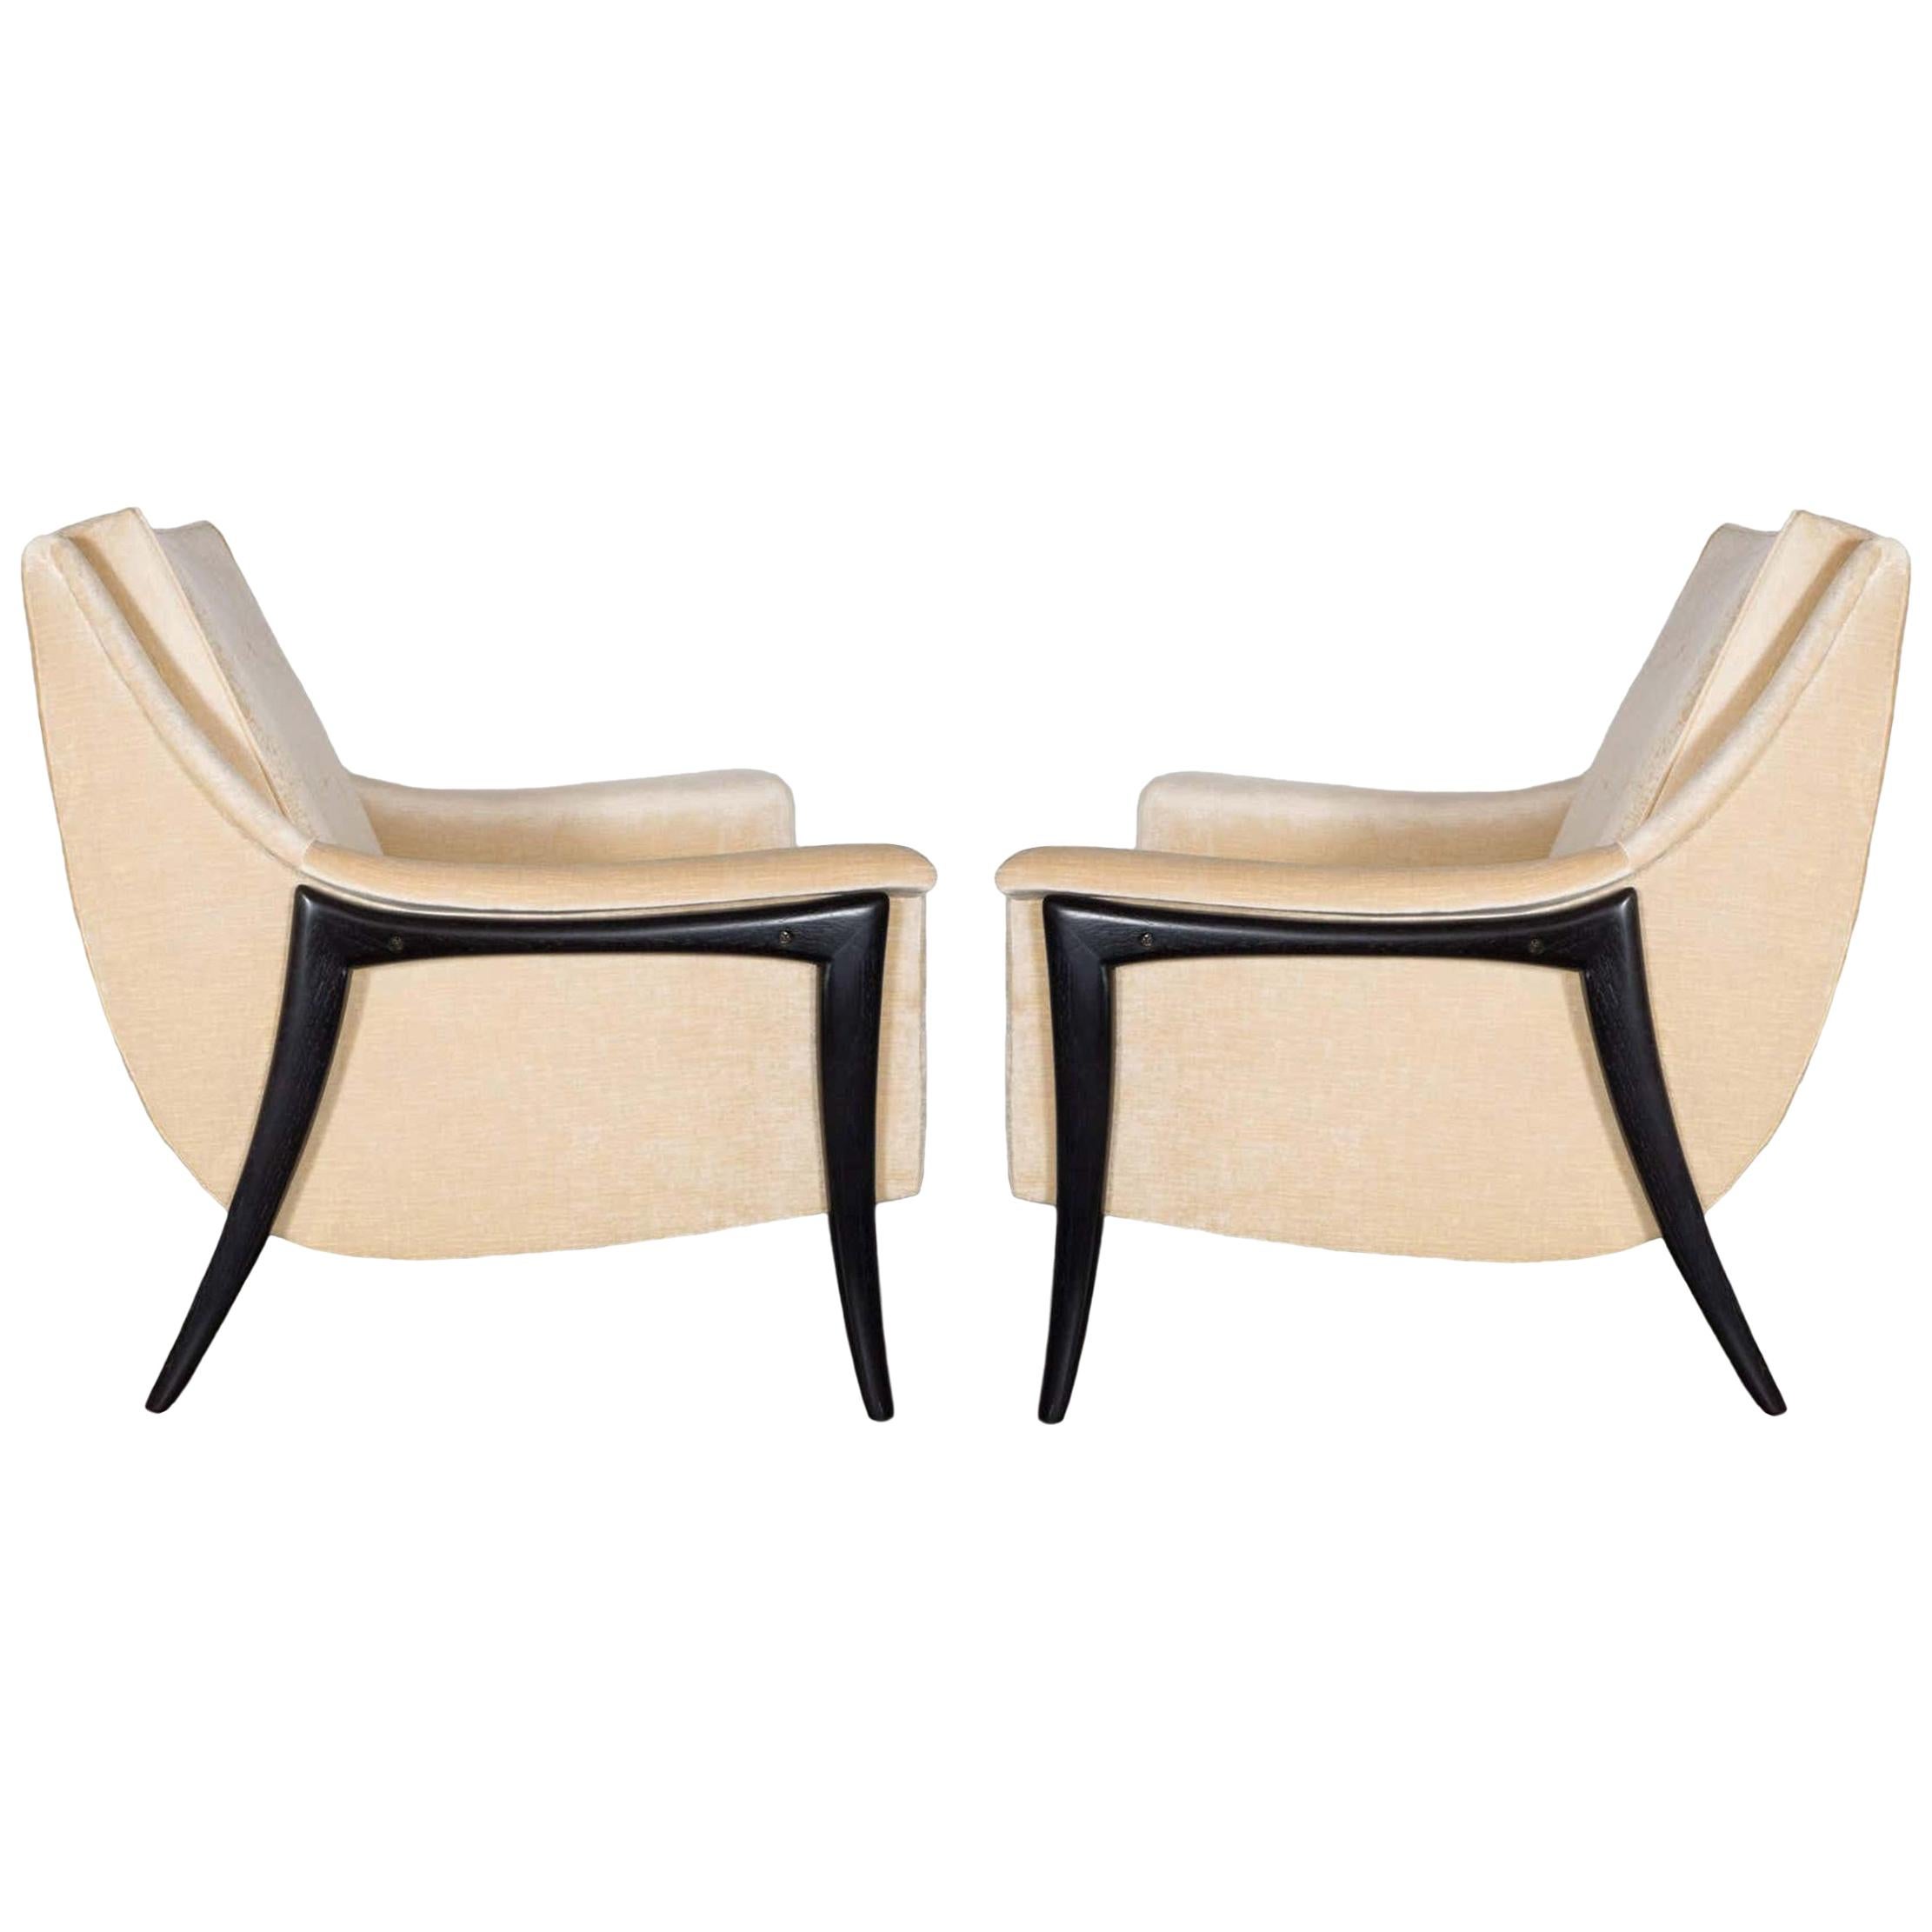 Pair of Kroehler Clean Modernist Sculptural Form Chairs, Restored